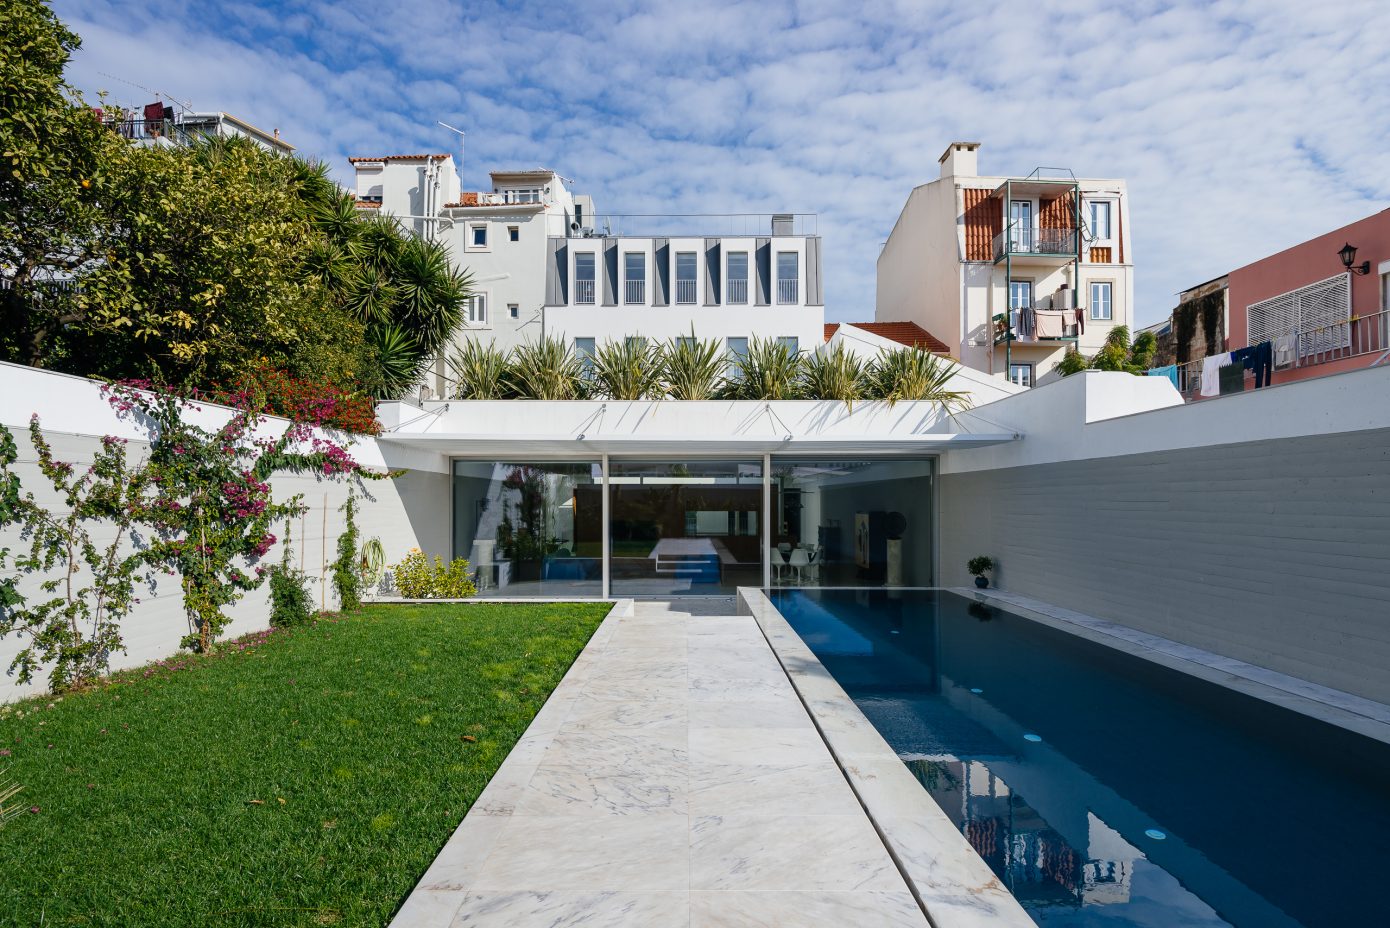 House in Lisbon by Aurora Arquitectos